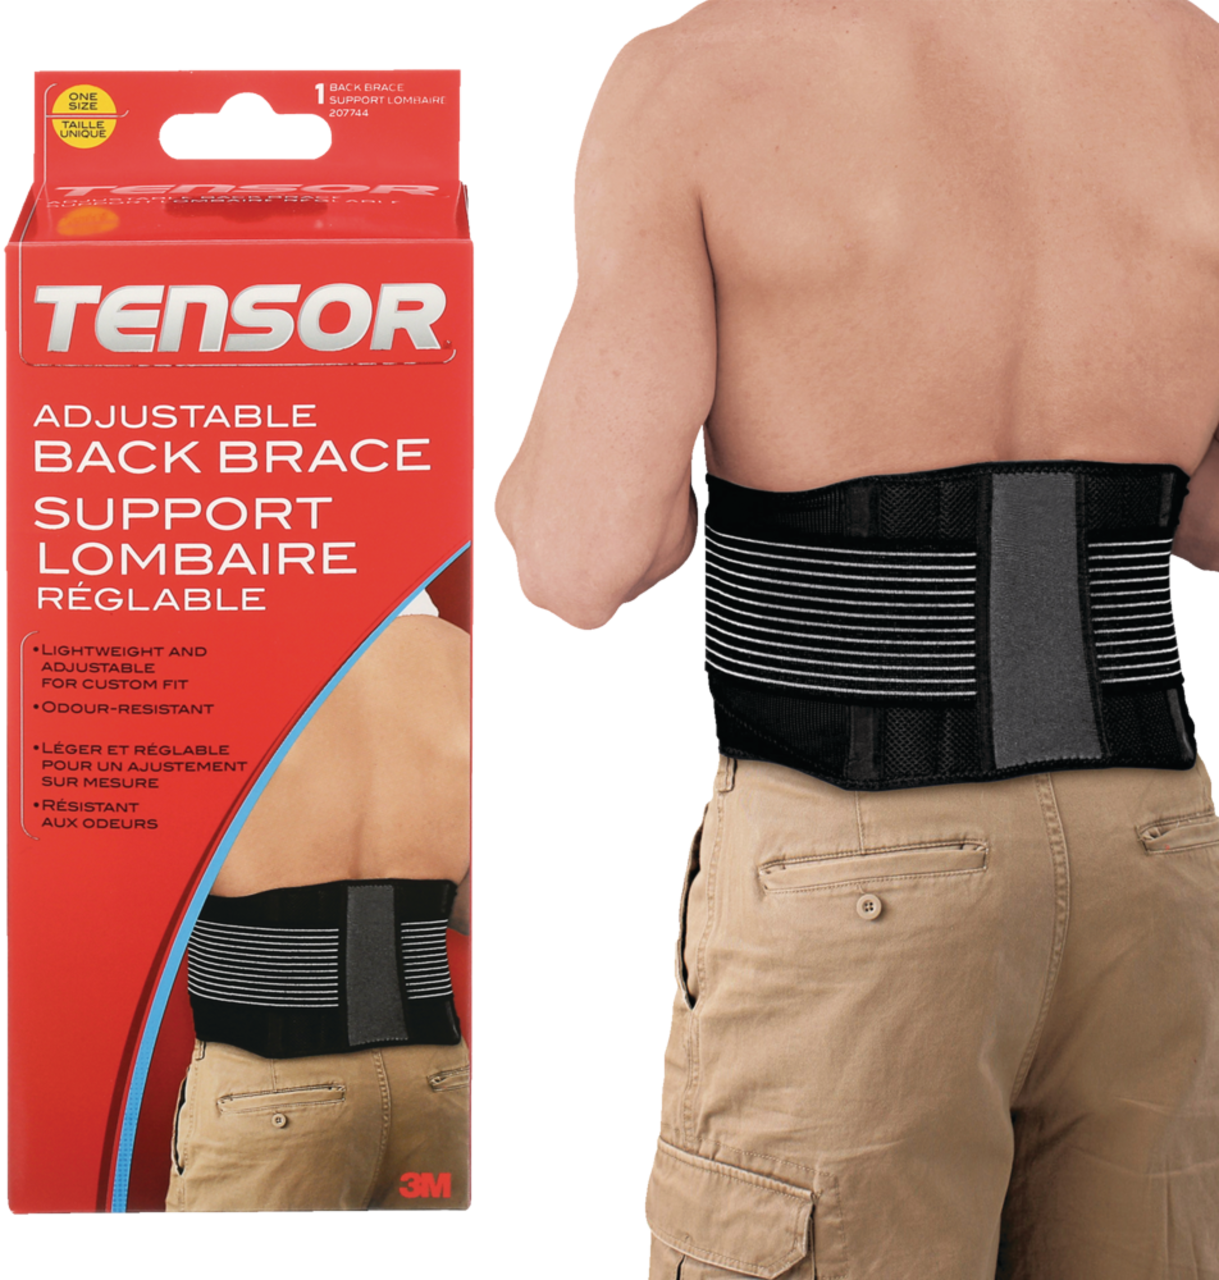 TRADY Back Brace Lumbar Back Support Belt for Lower Back Pain